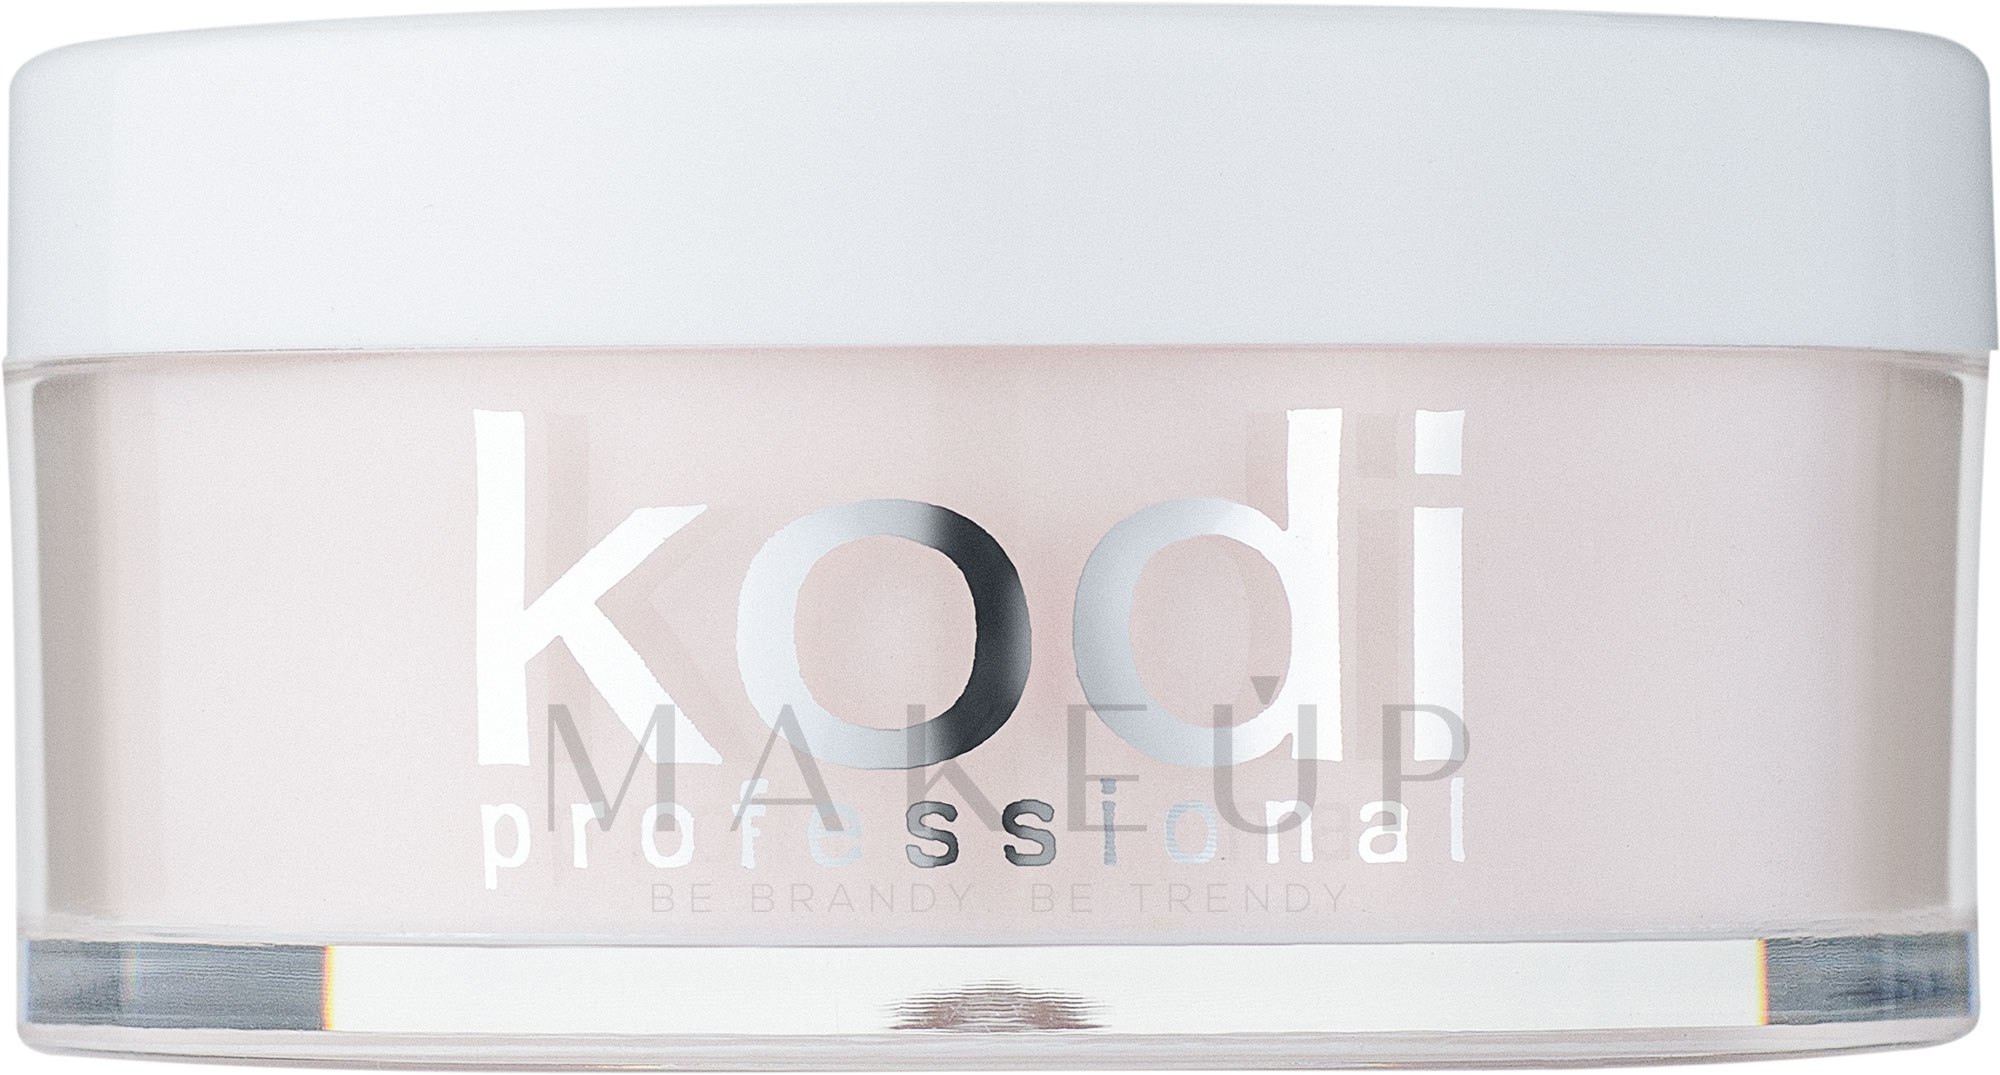 Acryl-Basis Pfirsich - Kodi Professional Natural Peach Powder — Bild 22 g